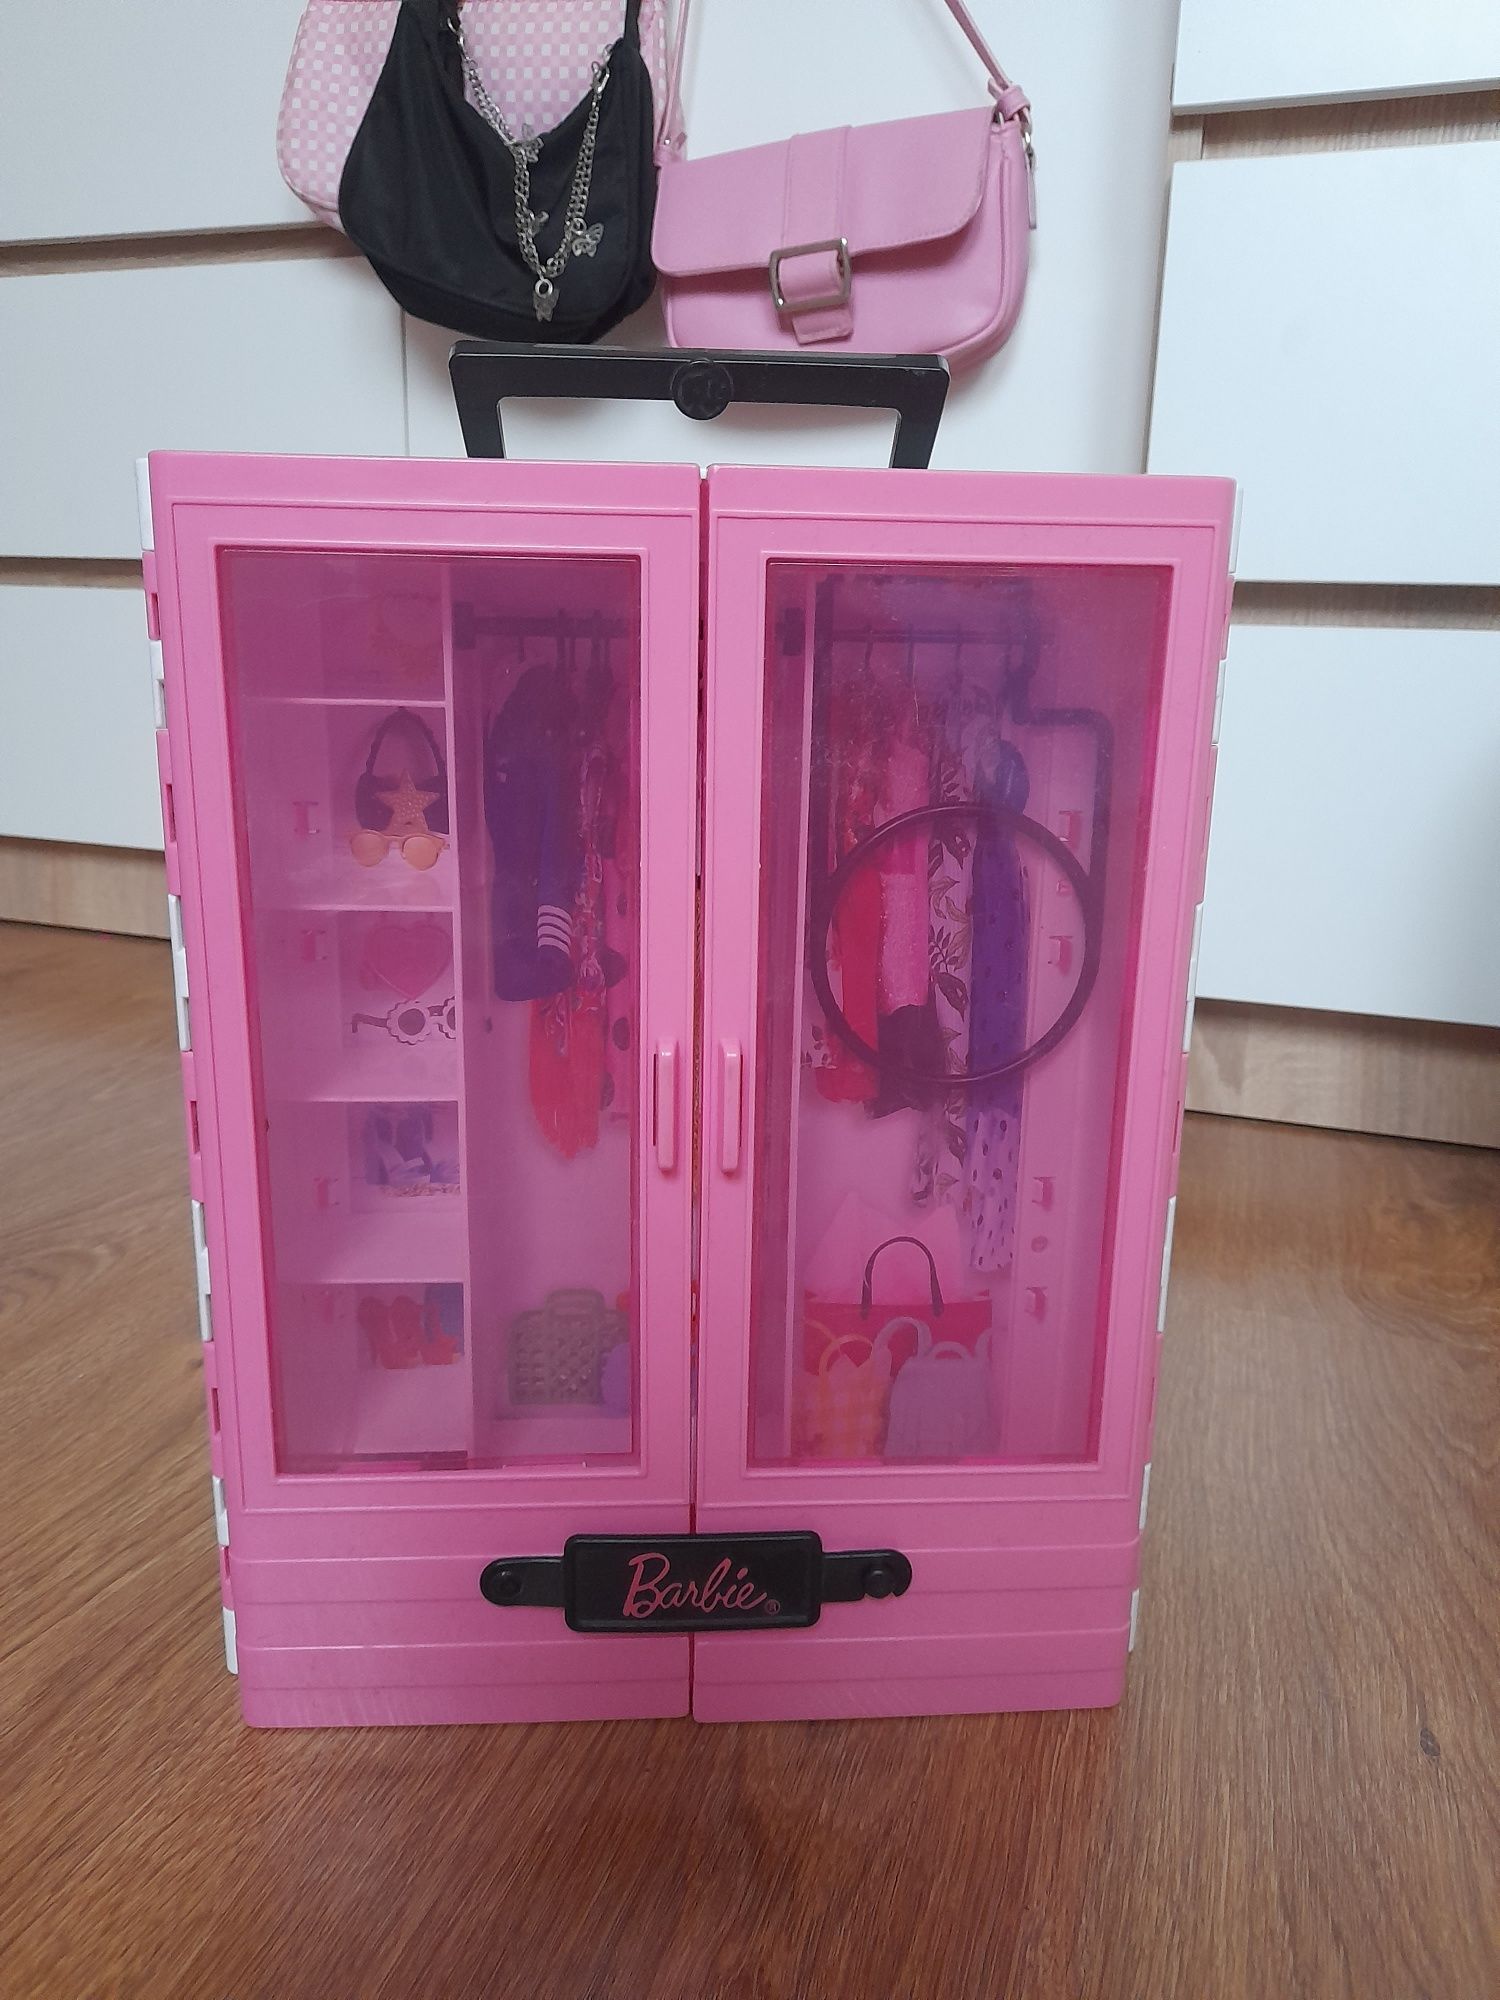 Garderoba szafa dla lalki  Barbie wieszaki